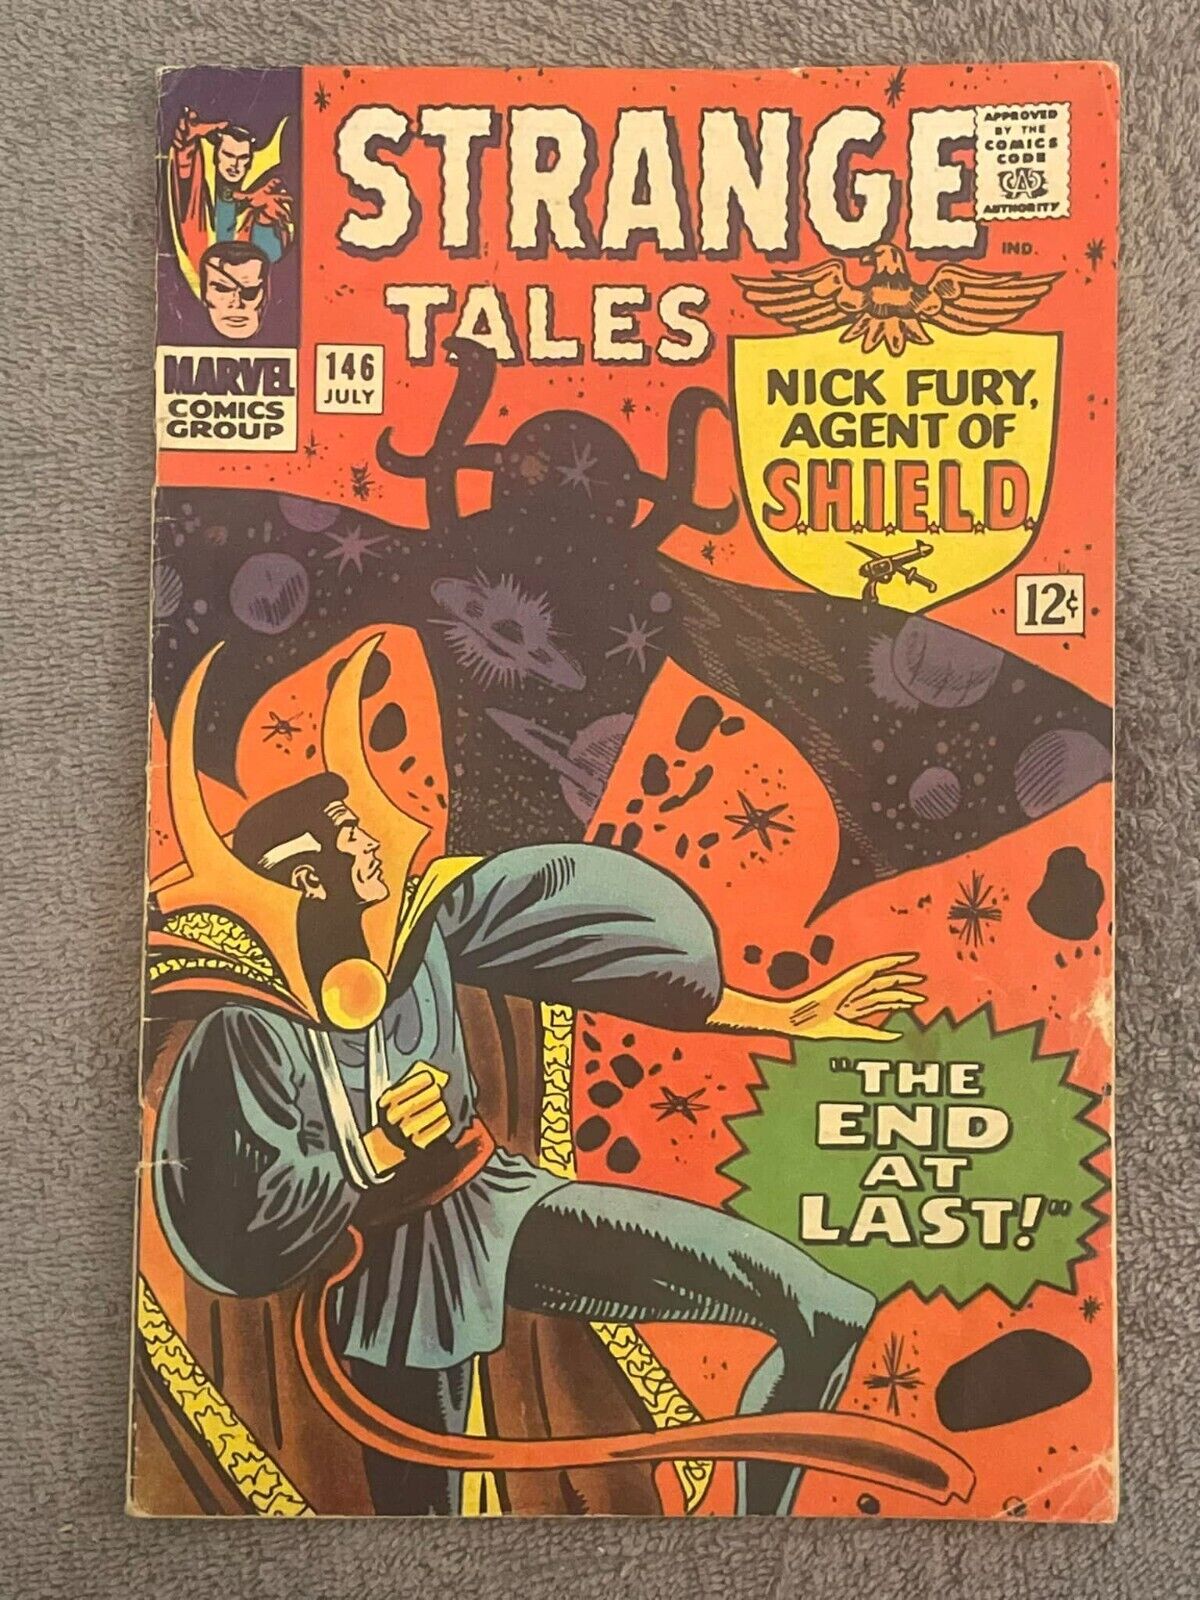 Strange Tales #146 (RAW 6.0 - MARVEL 1966) Key: 1st AIM Advanced Idea Mechanics